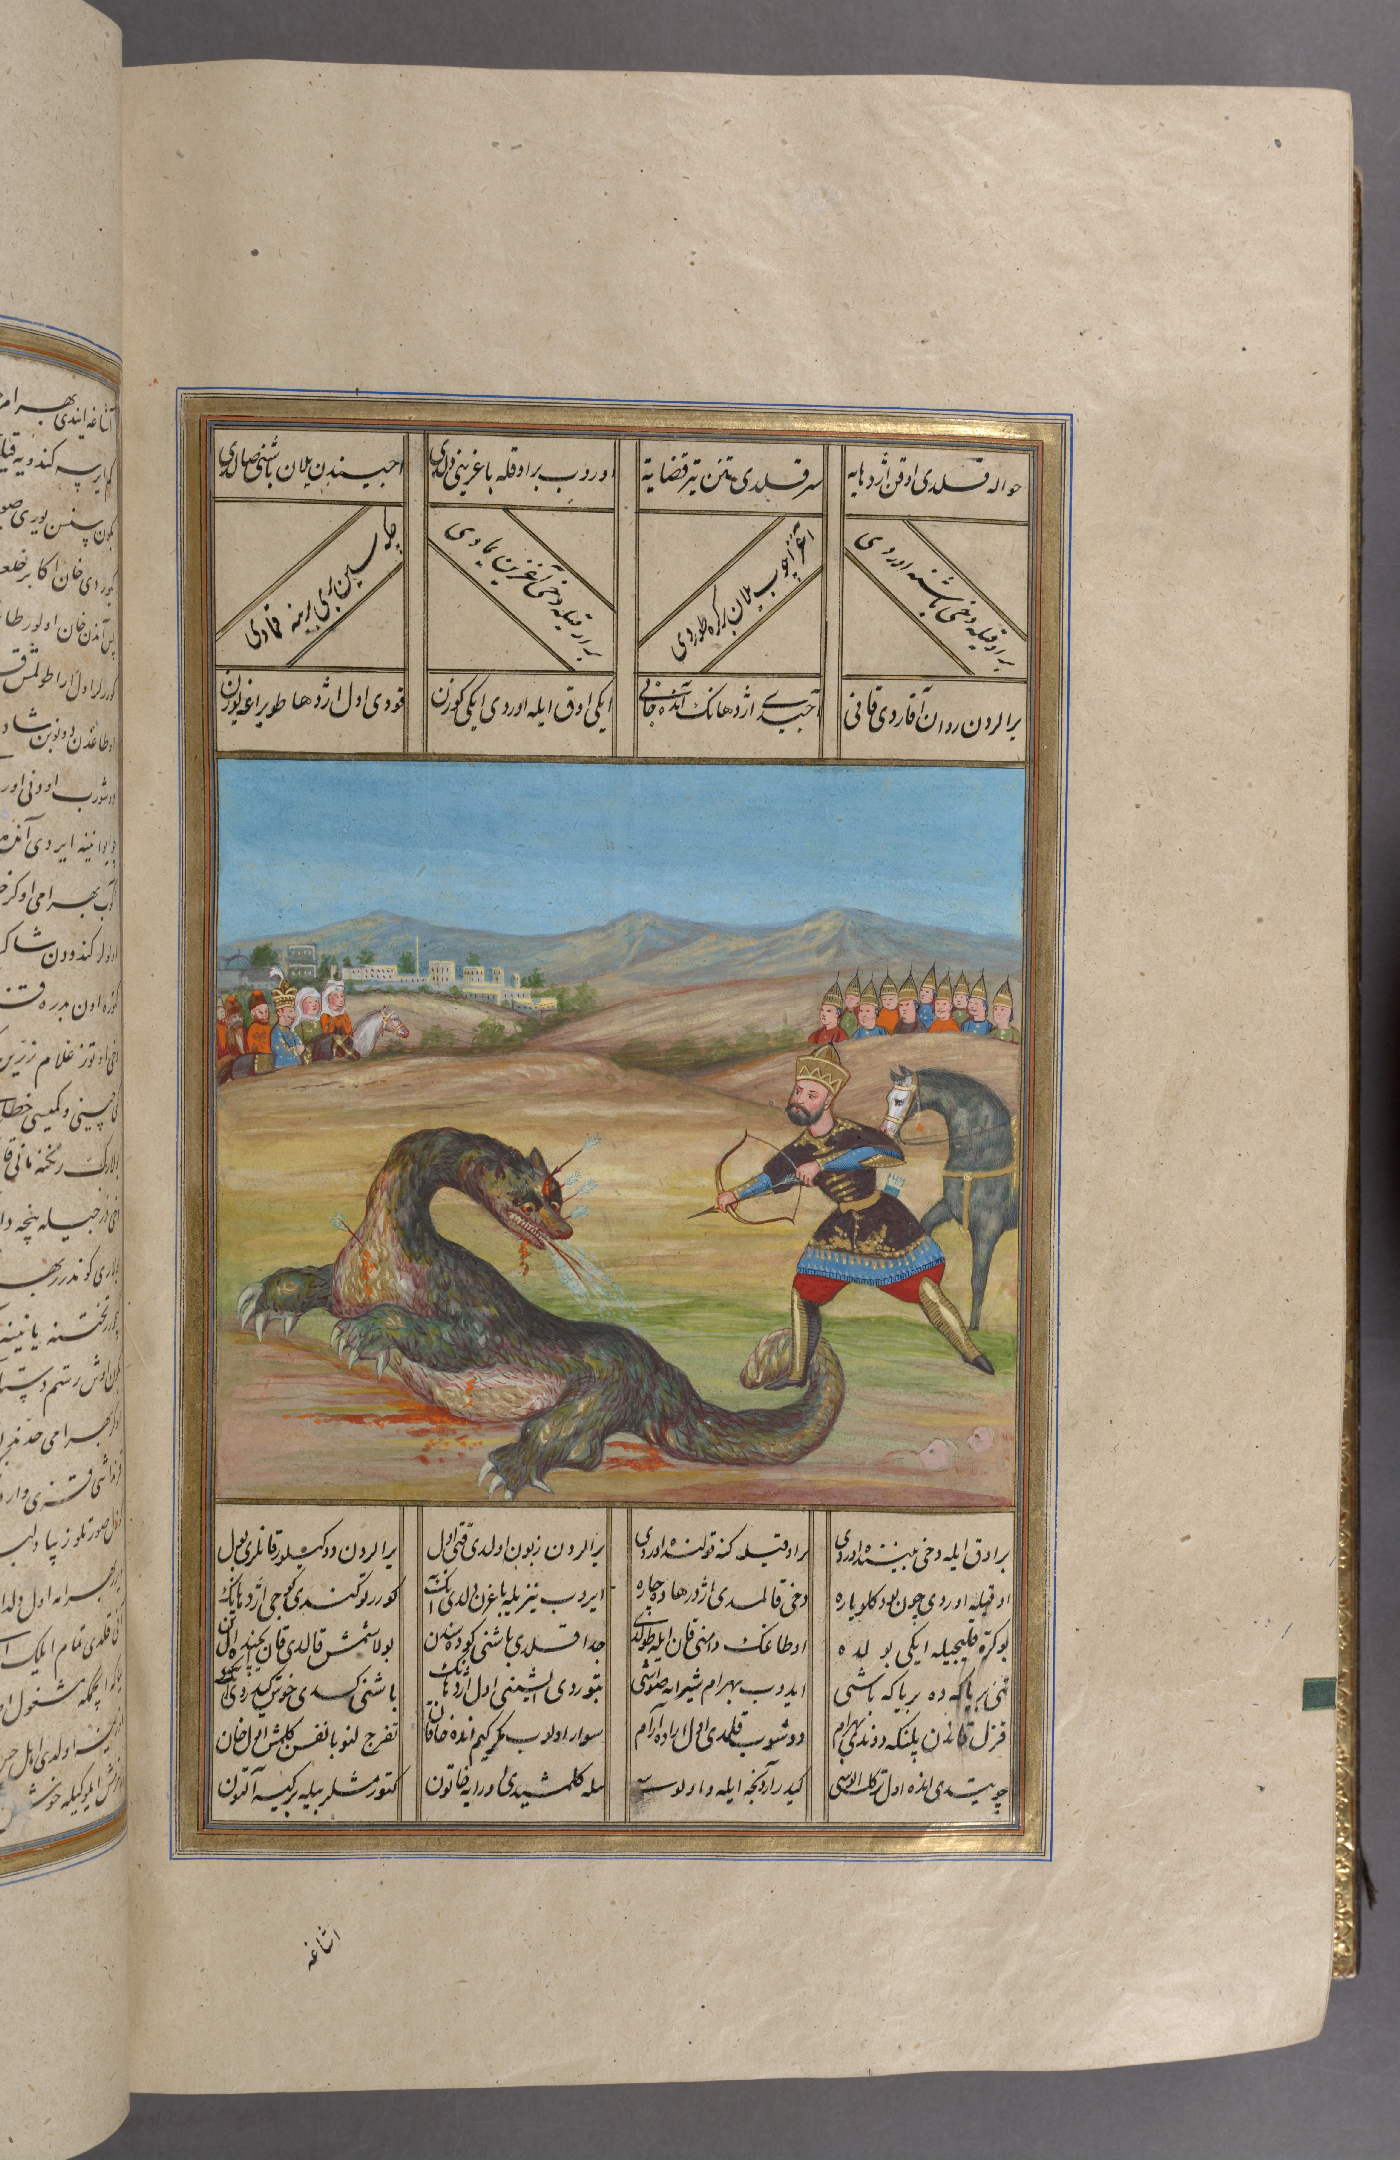 Illustrated Dragon manuscript